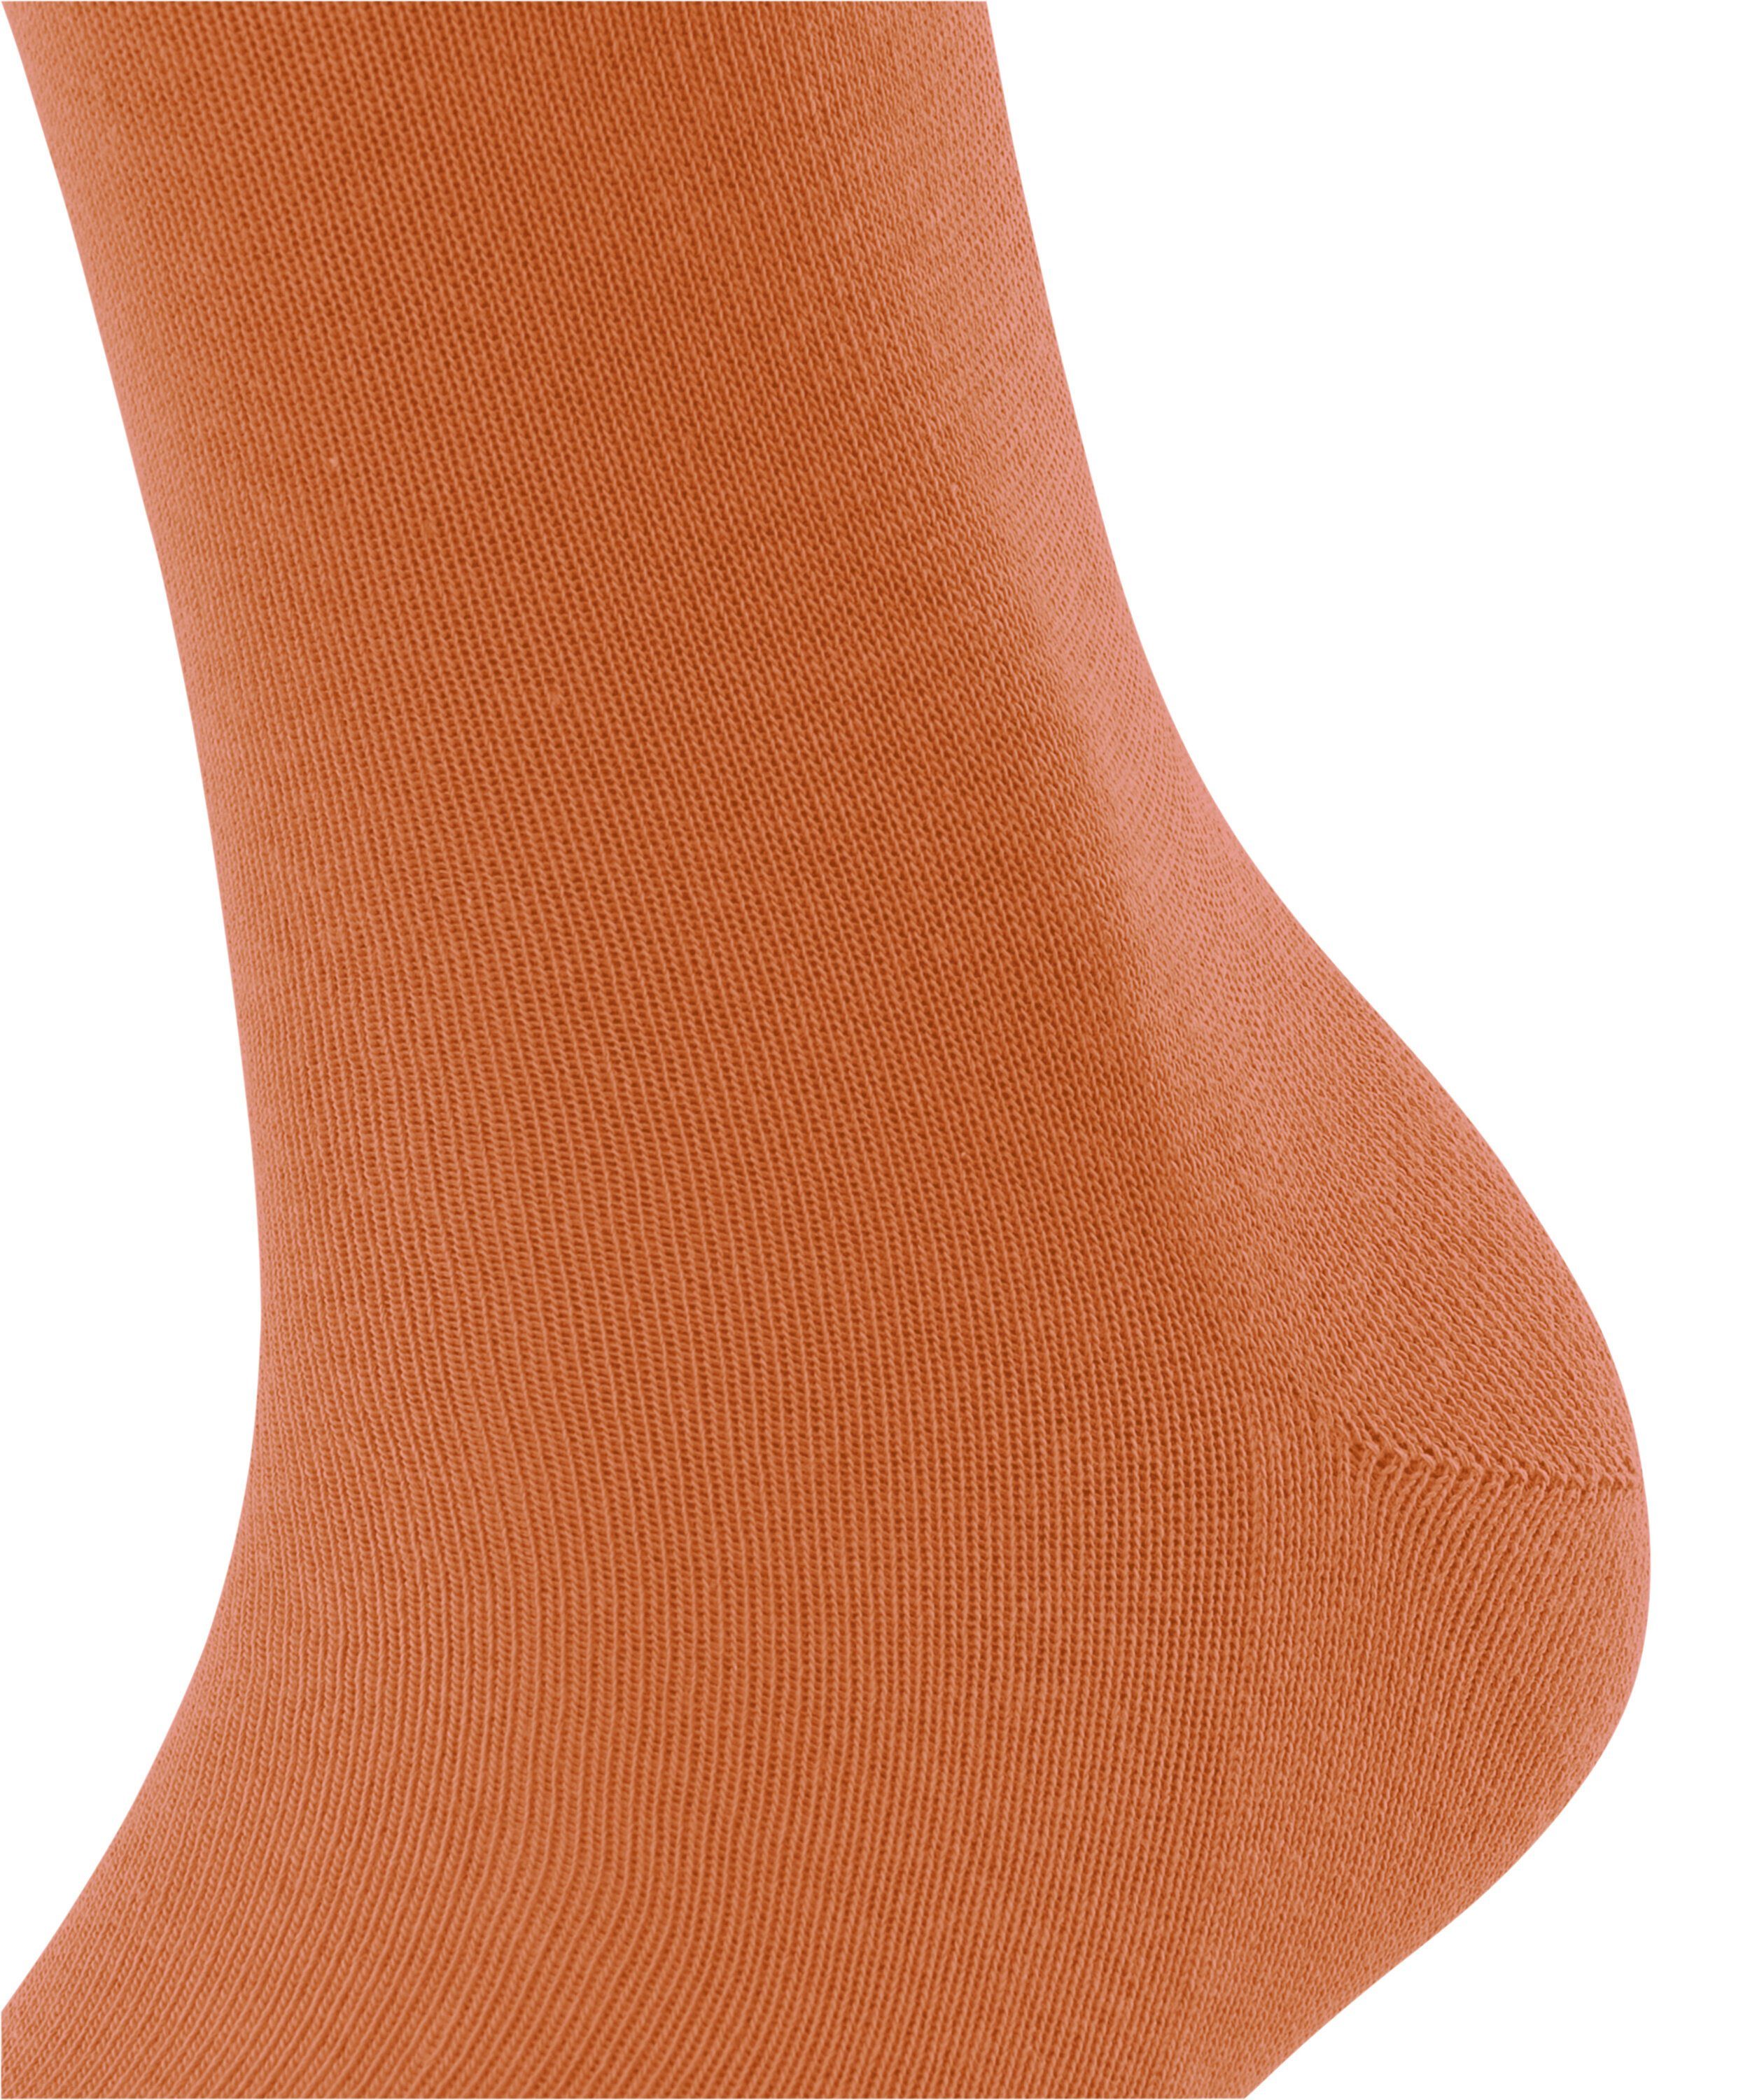 Family tandoori FALKE (8576) (1-Paar) Socken